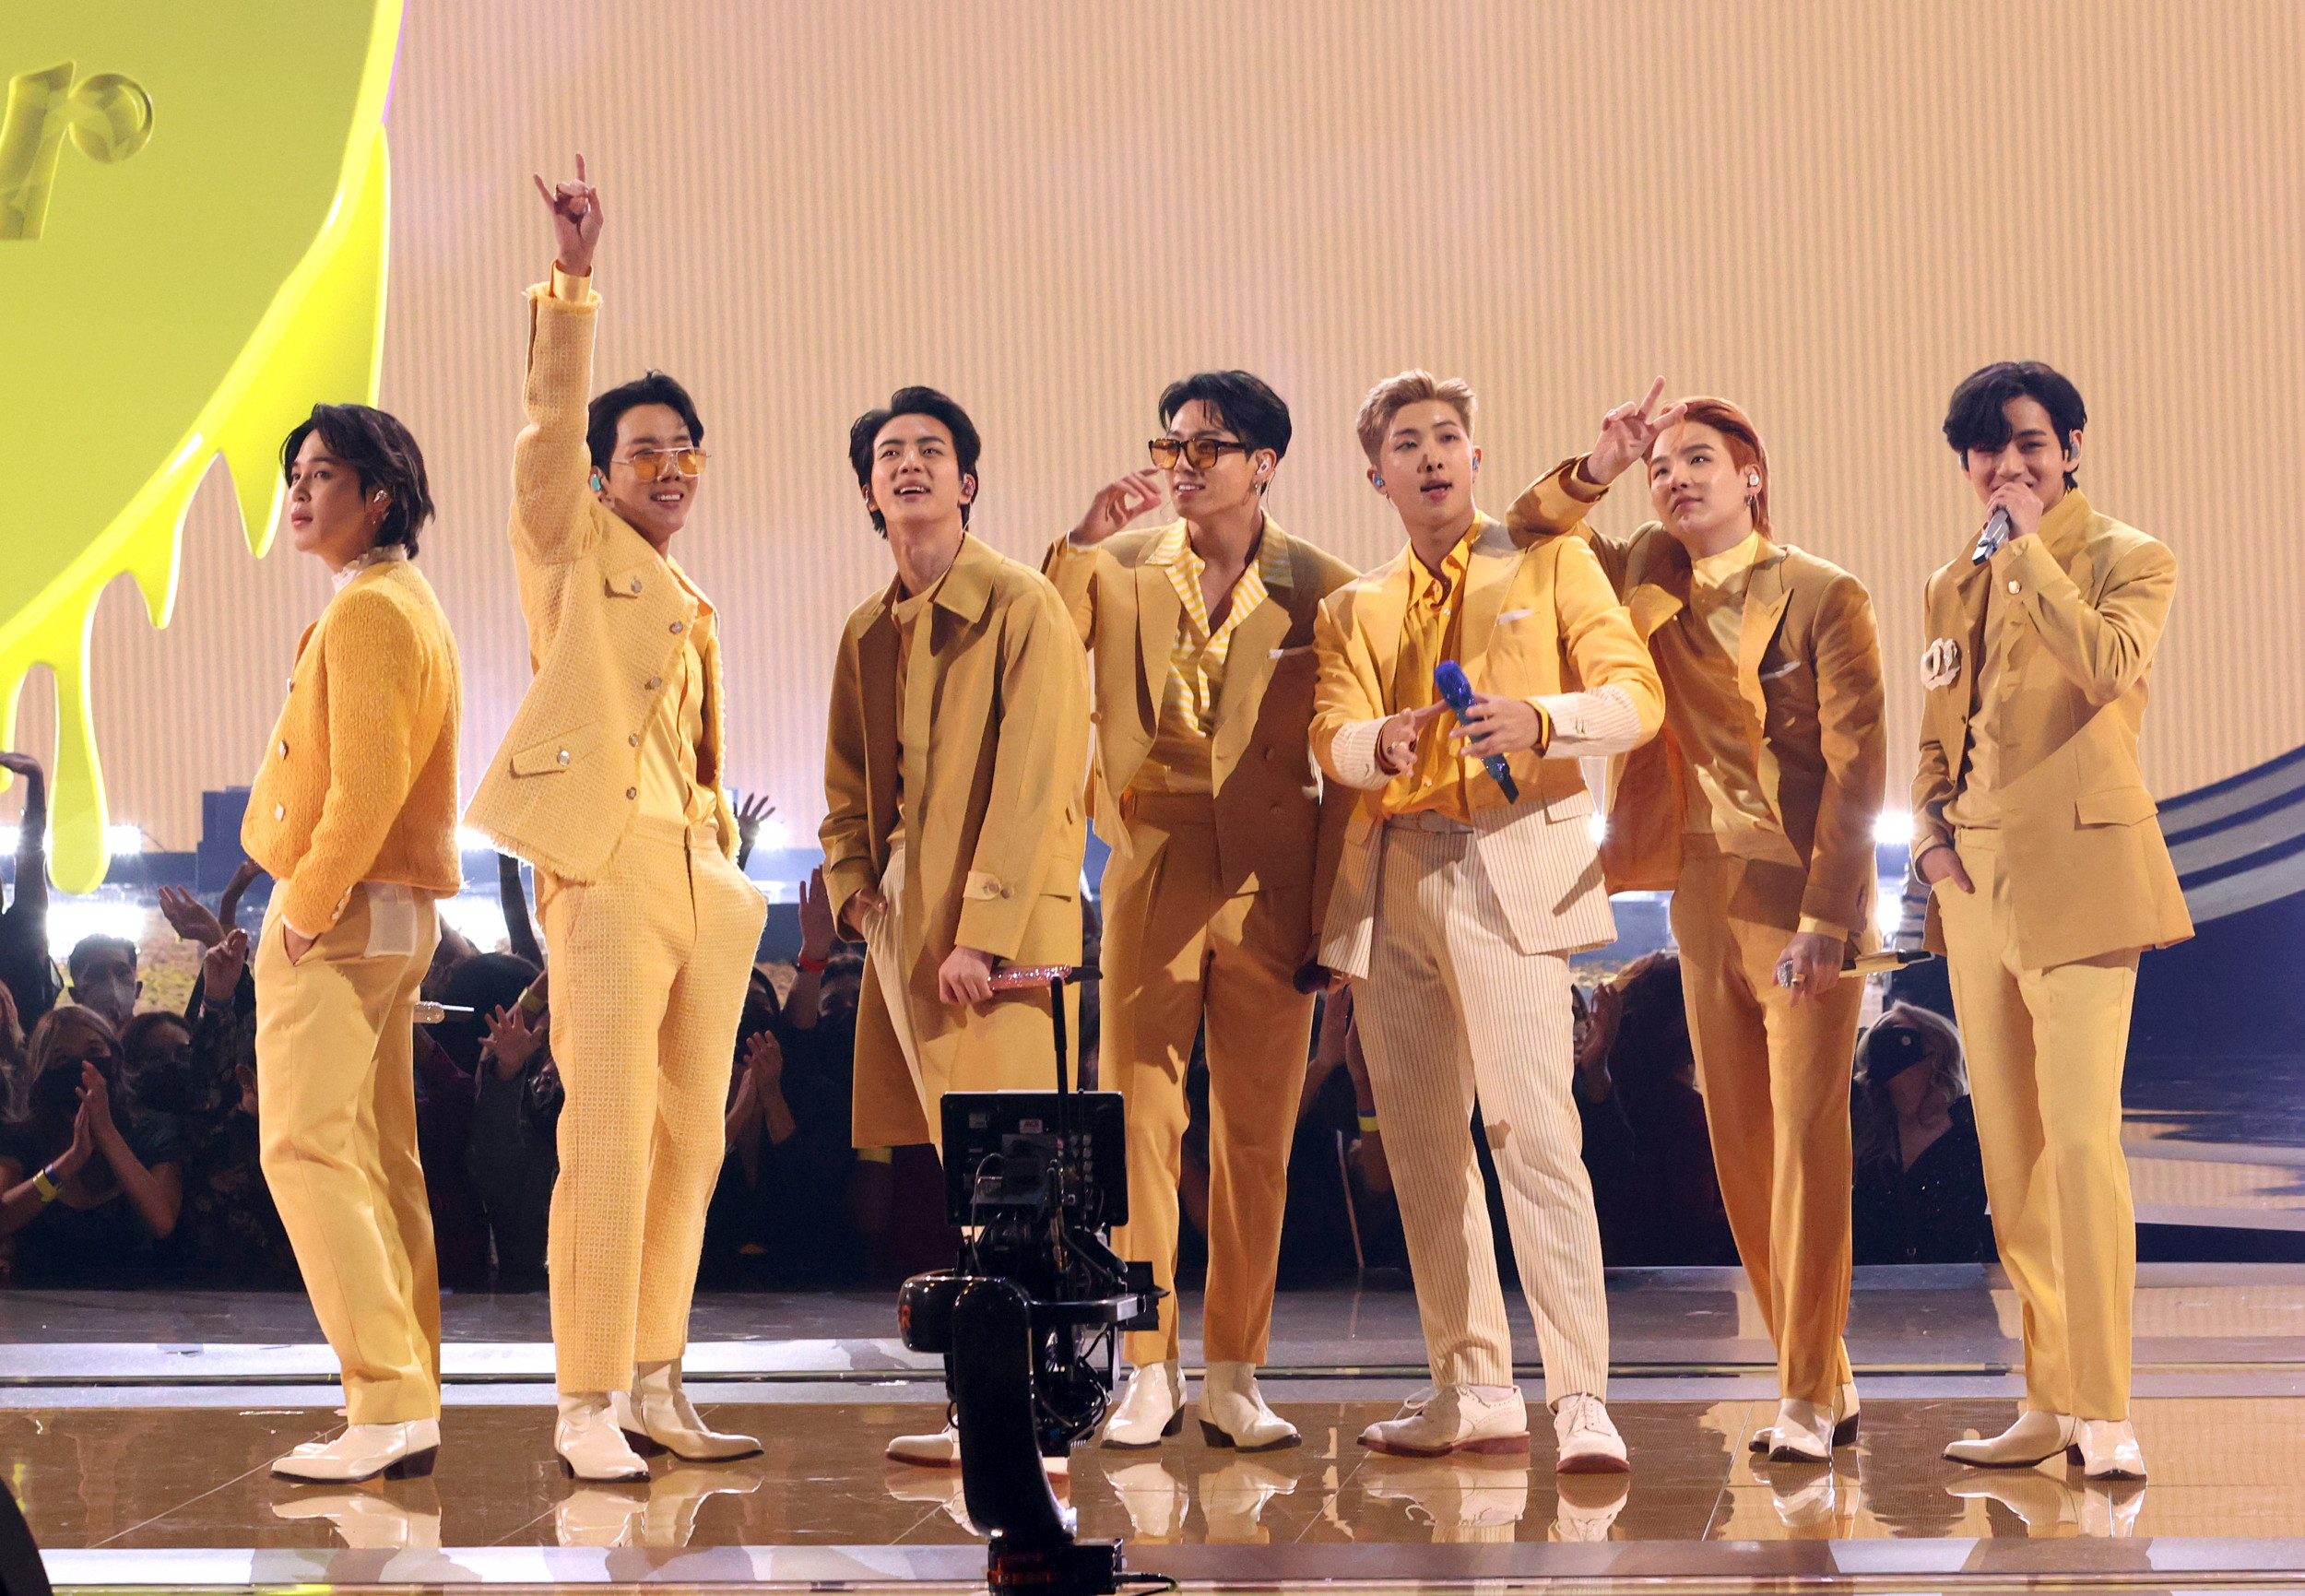 BTS Perform “Butter” at 2022 Grammys: Watch